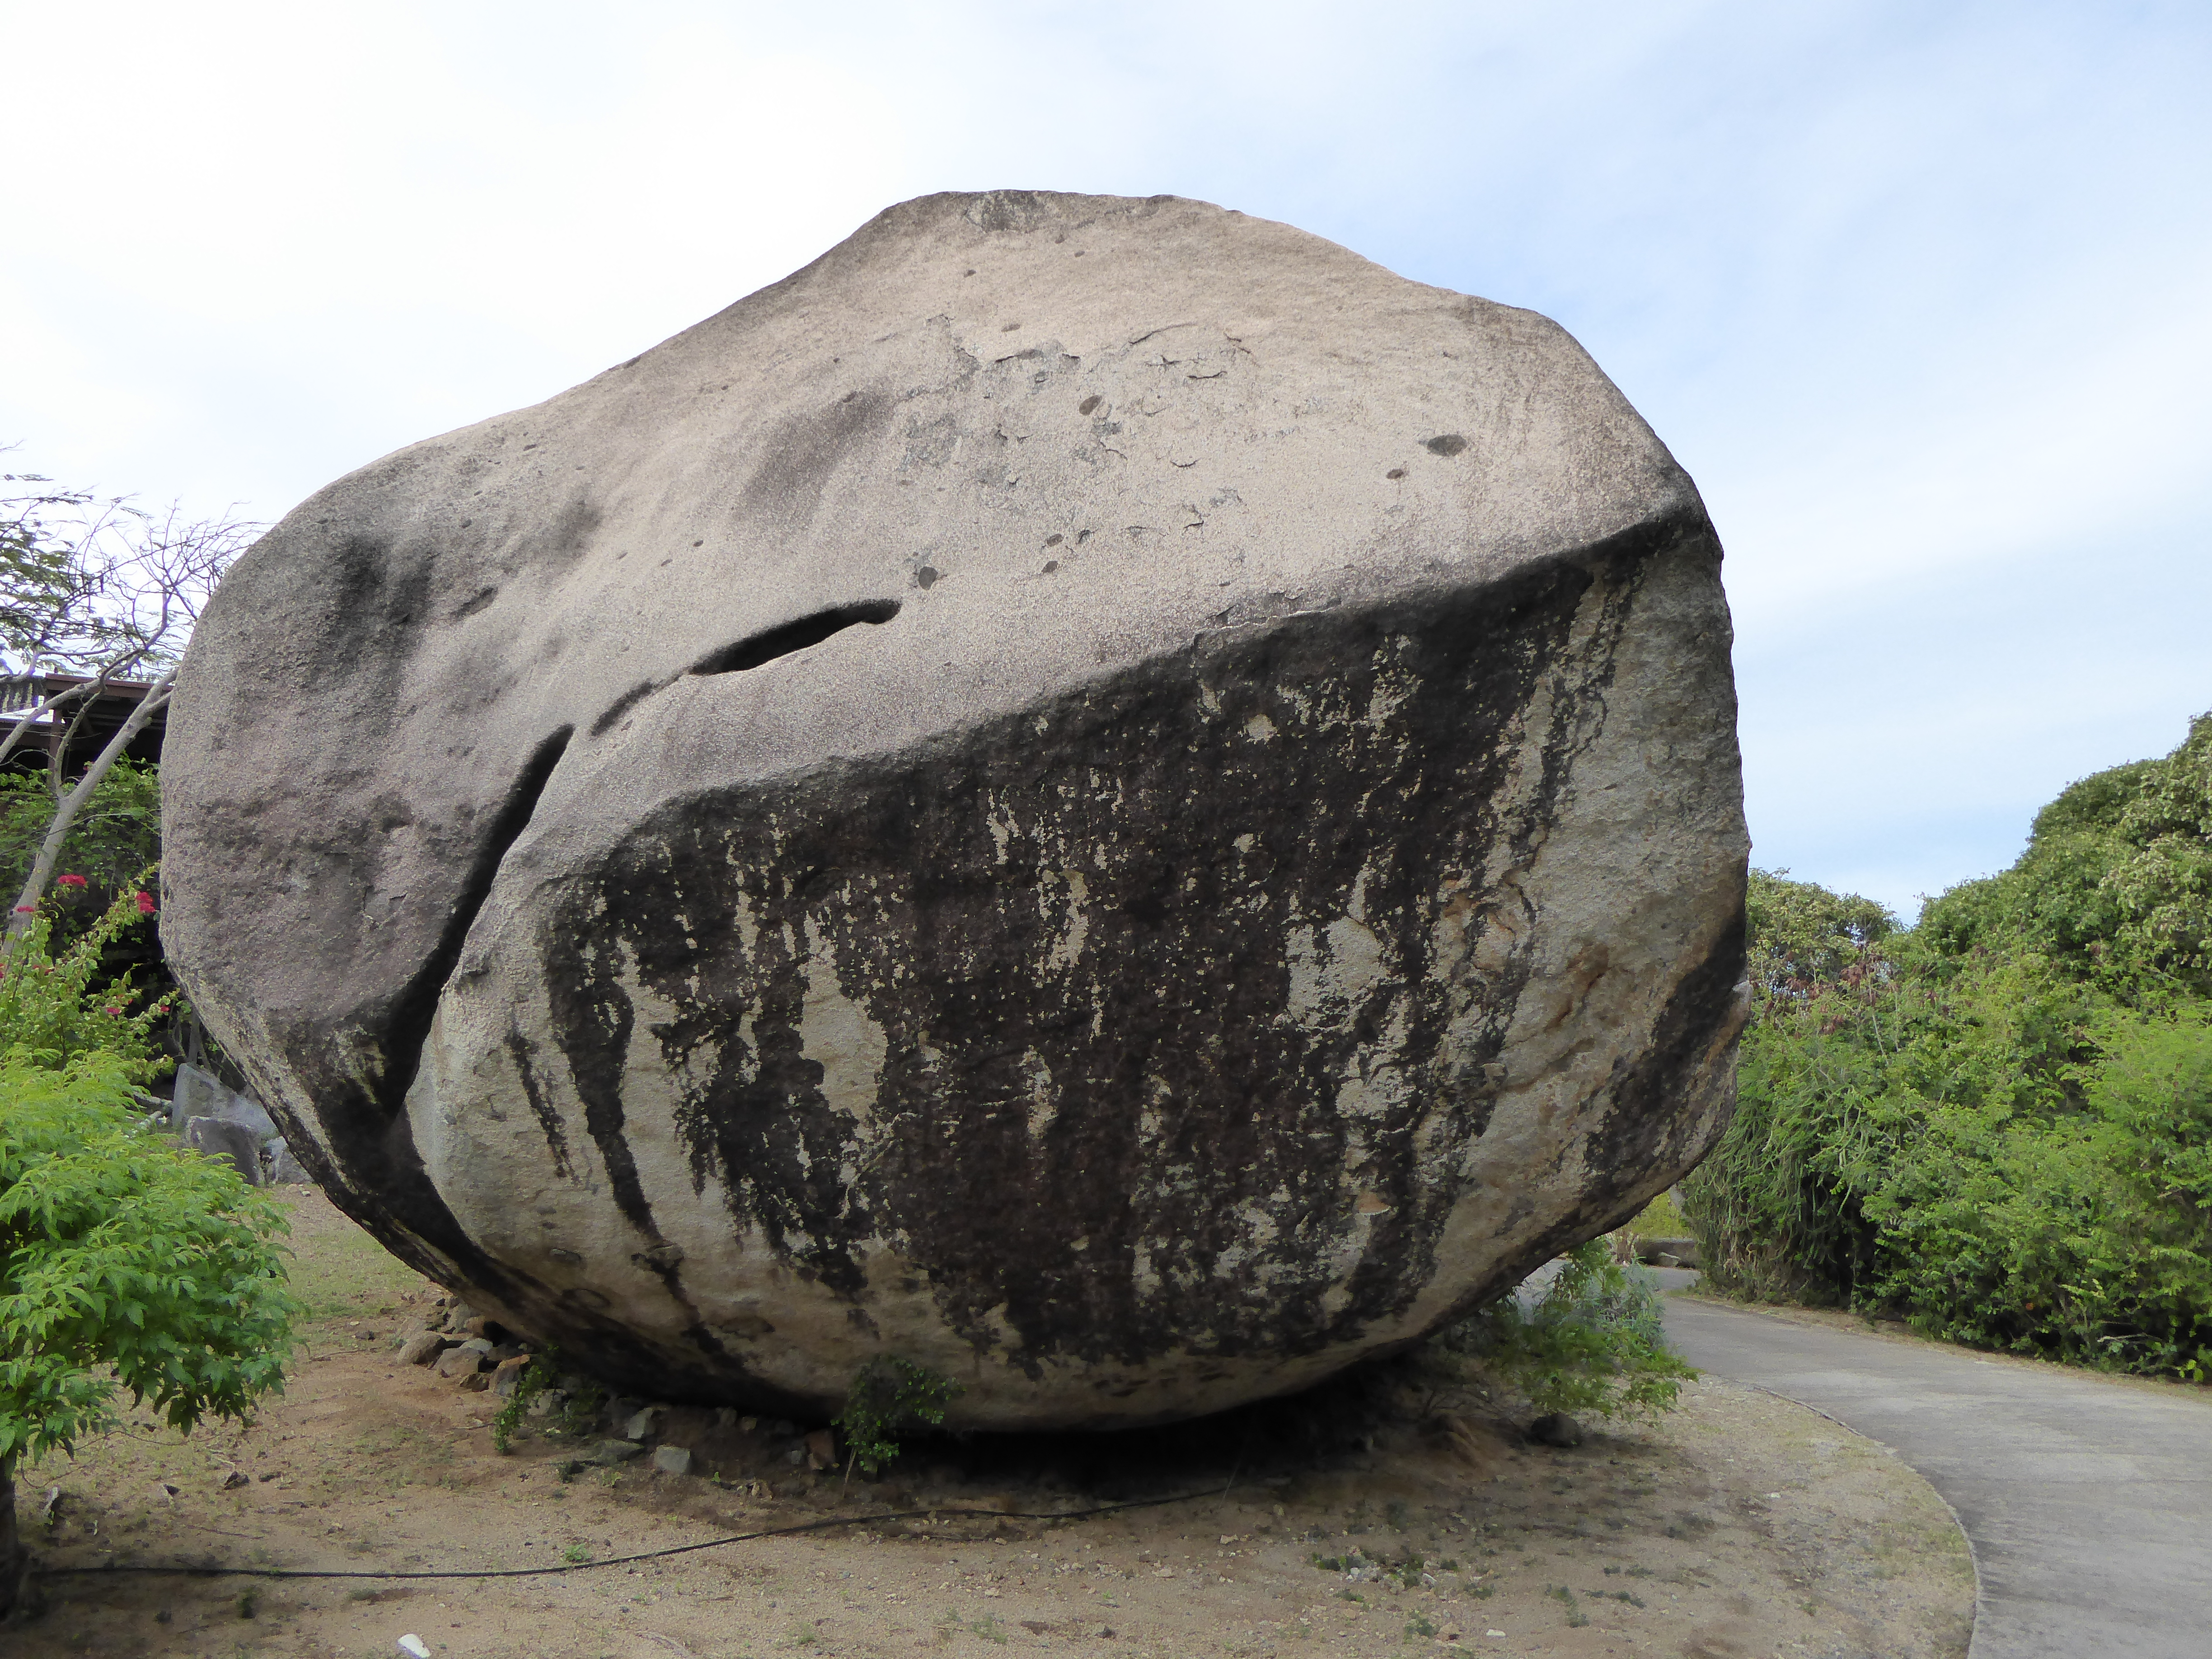 File:Virgin Gorda, British Virgin Islands — Big stone.JPG ...